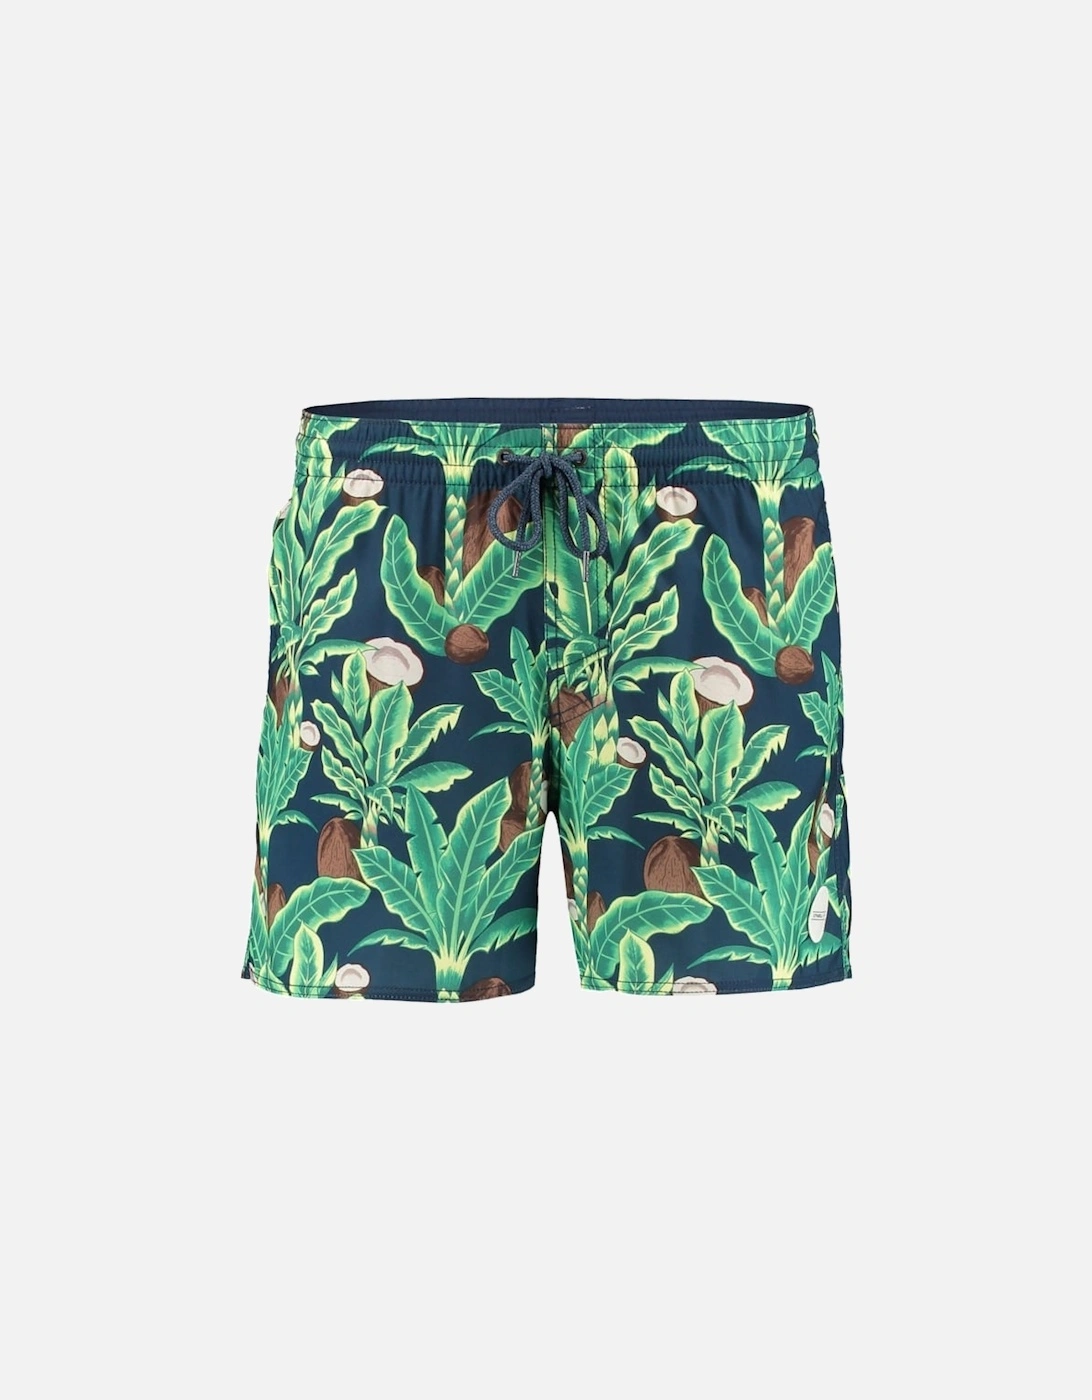 Venturer Coconut Trees Print Swim Shorts, Green/Blue